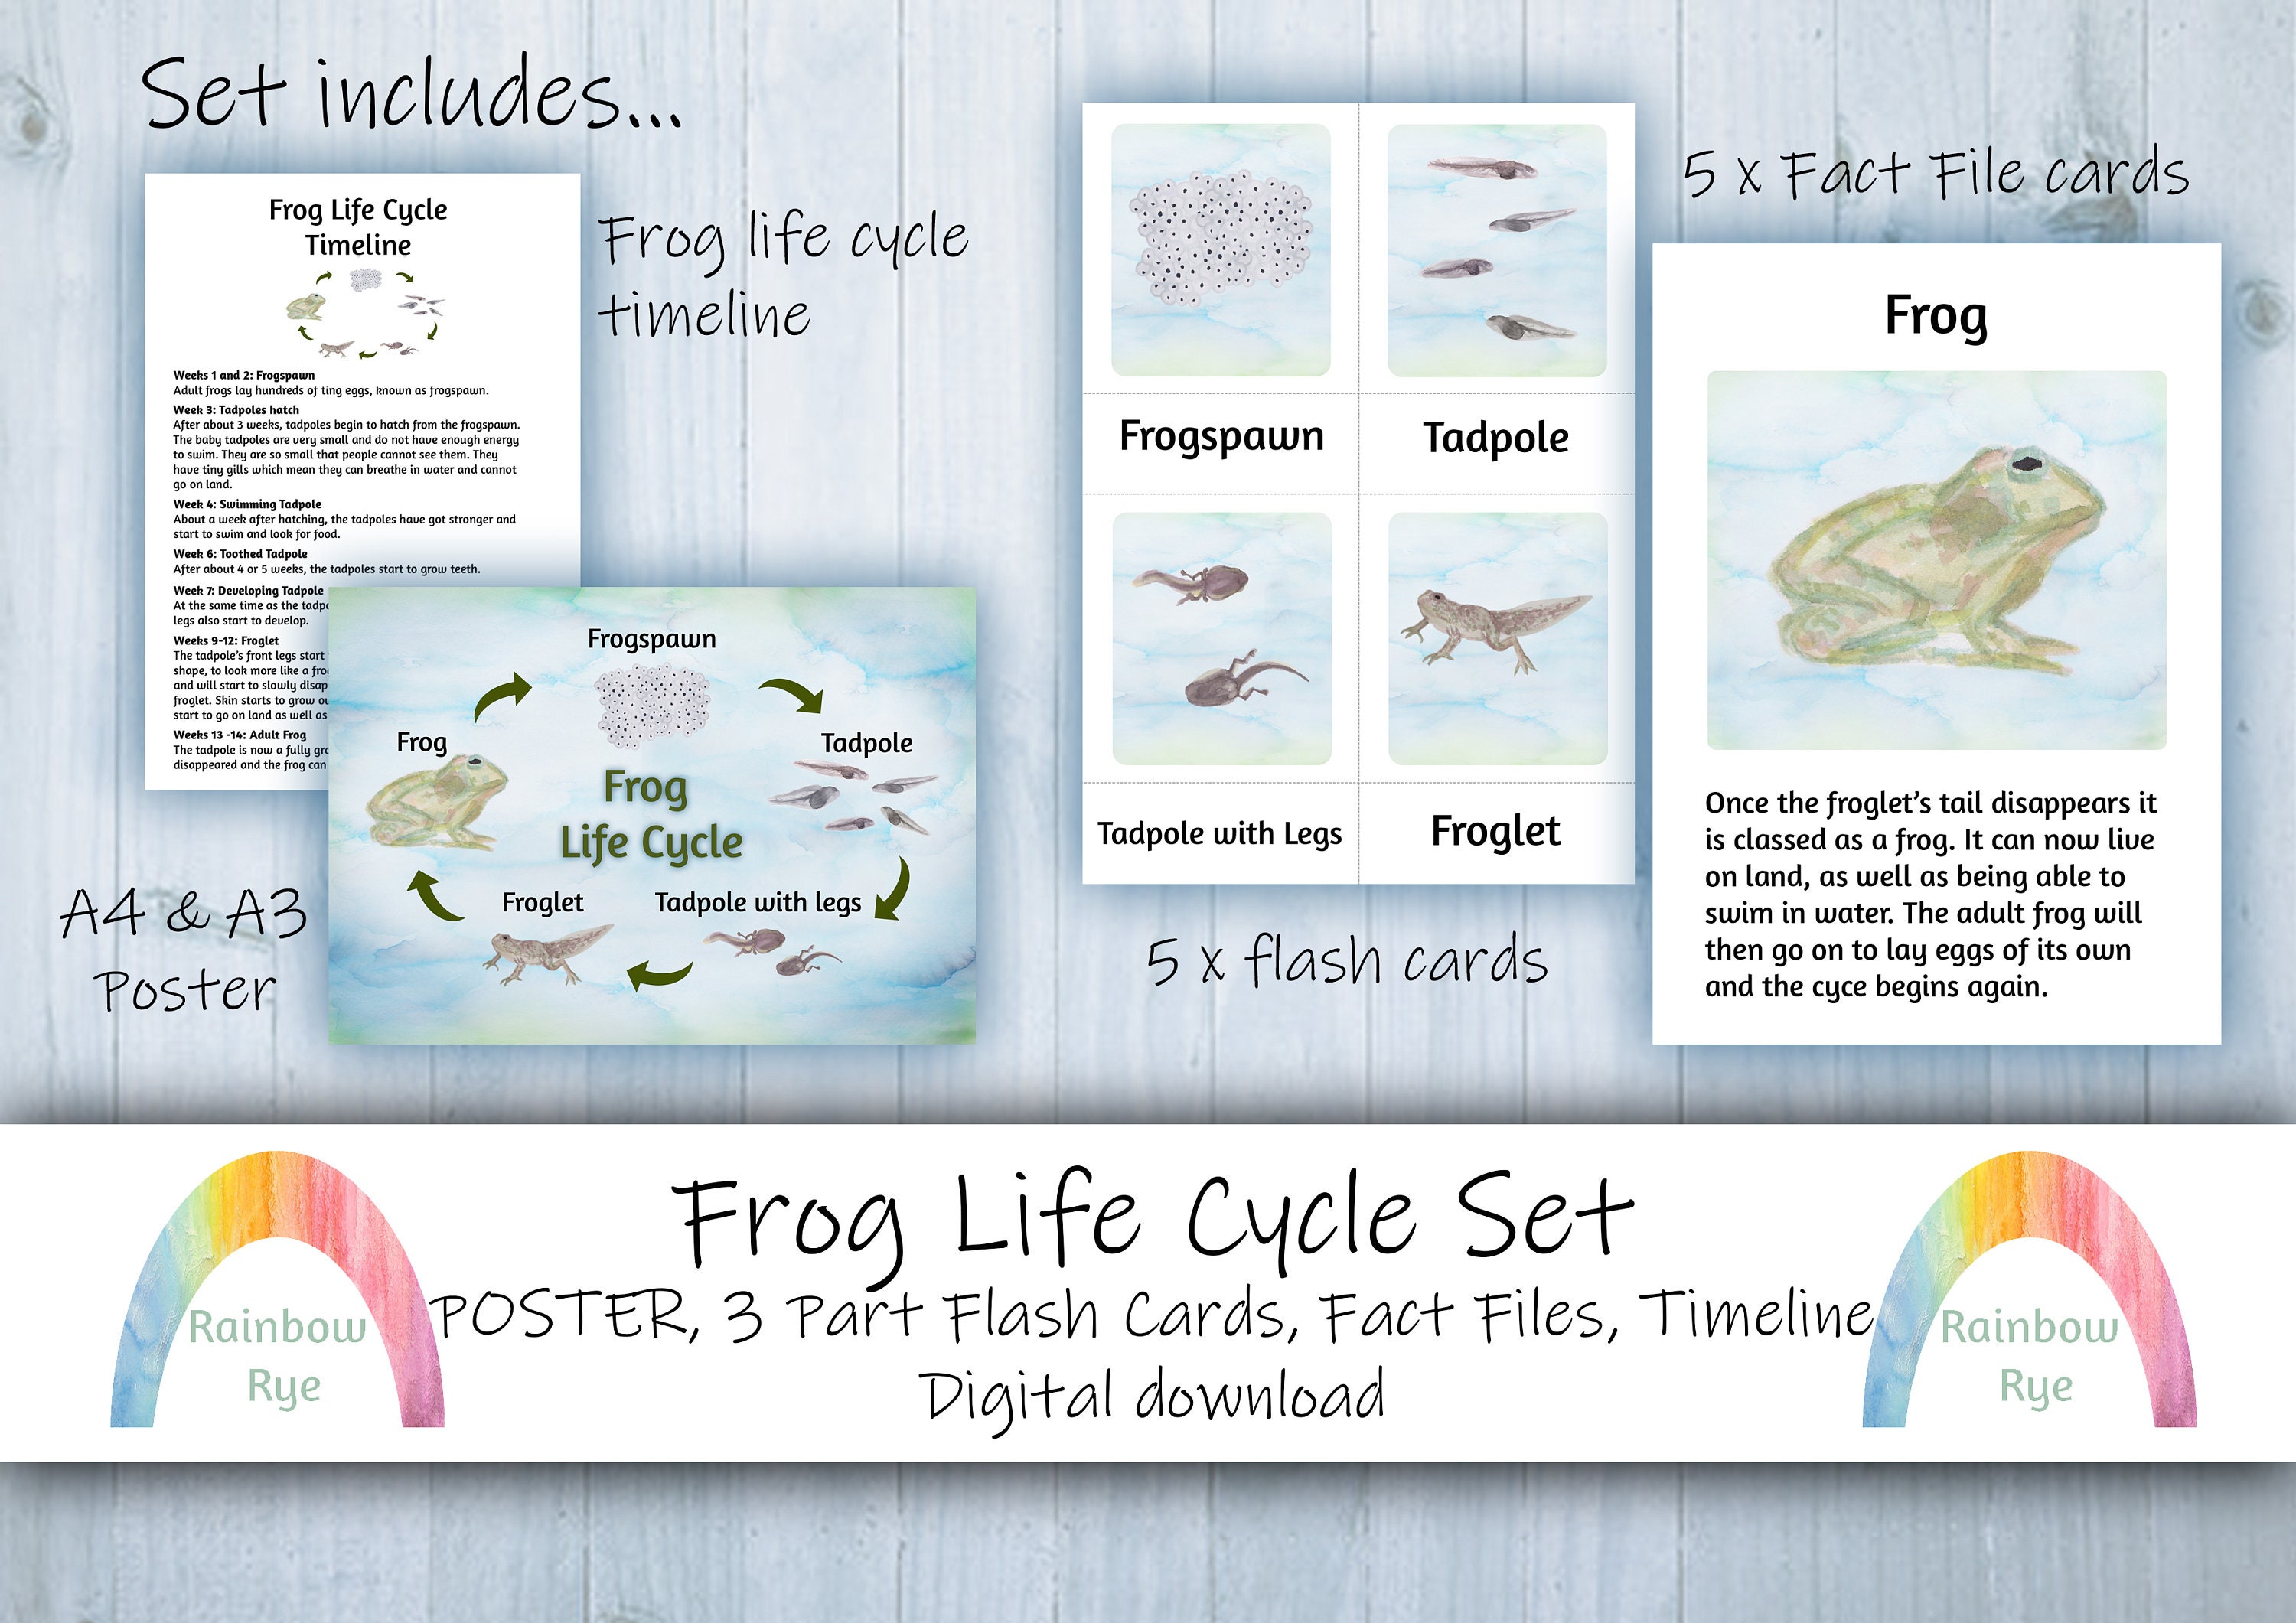 Frog Life Cycle Set Flash Cards Fact File Poster Timeline Digital